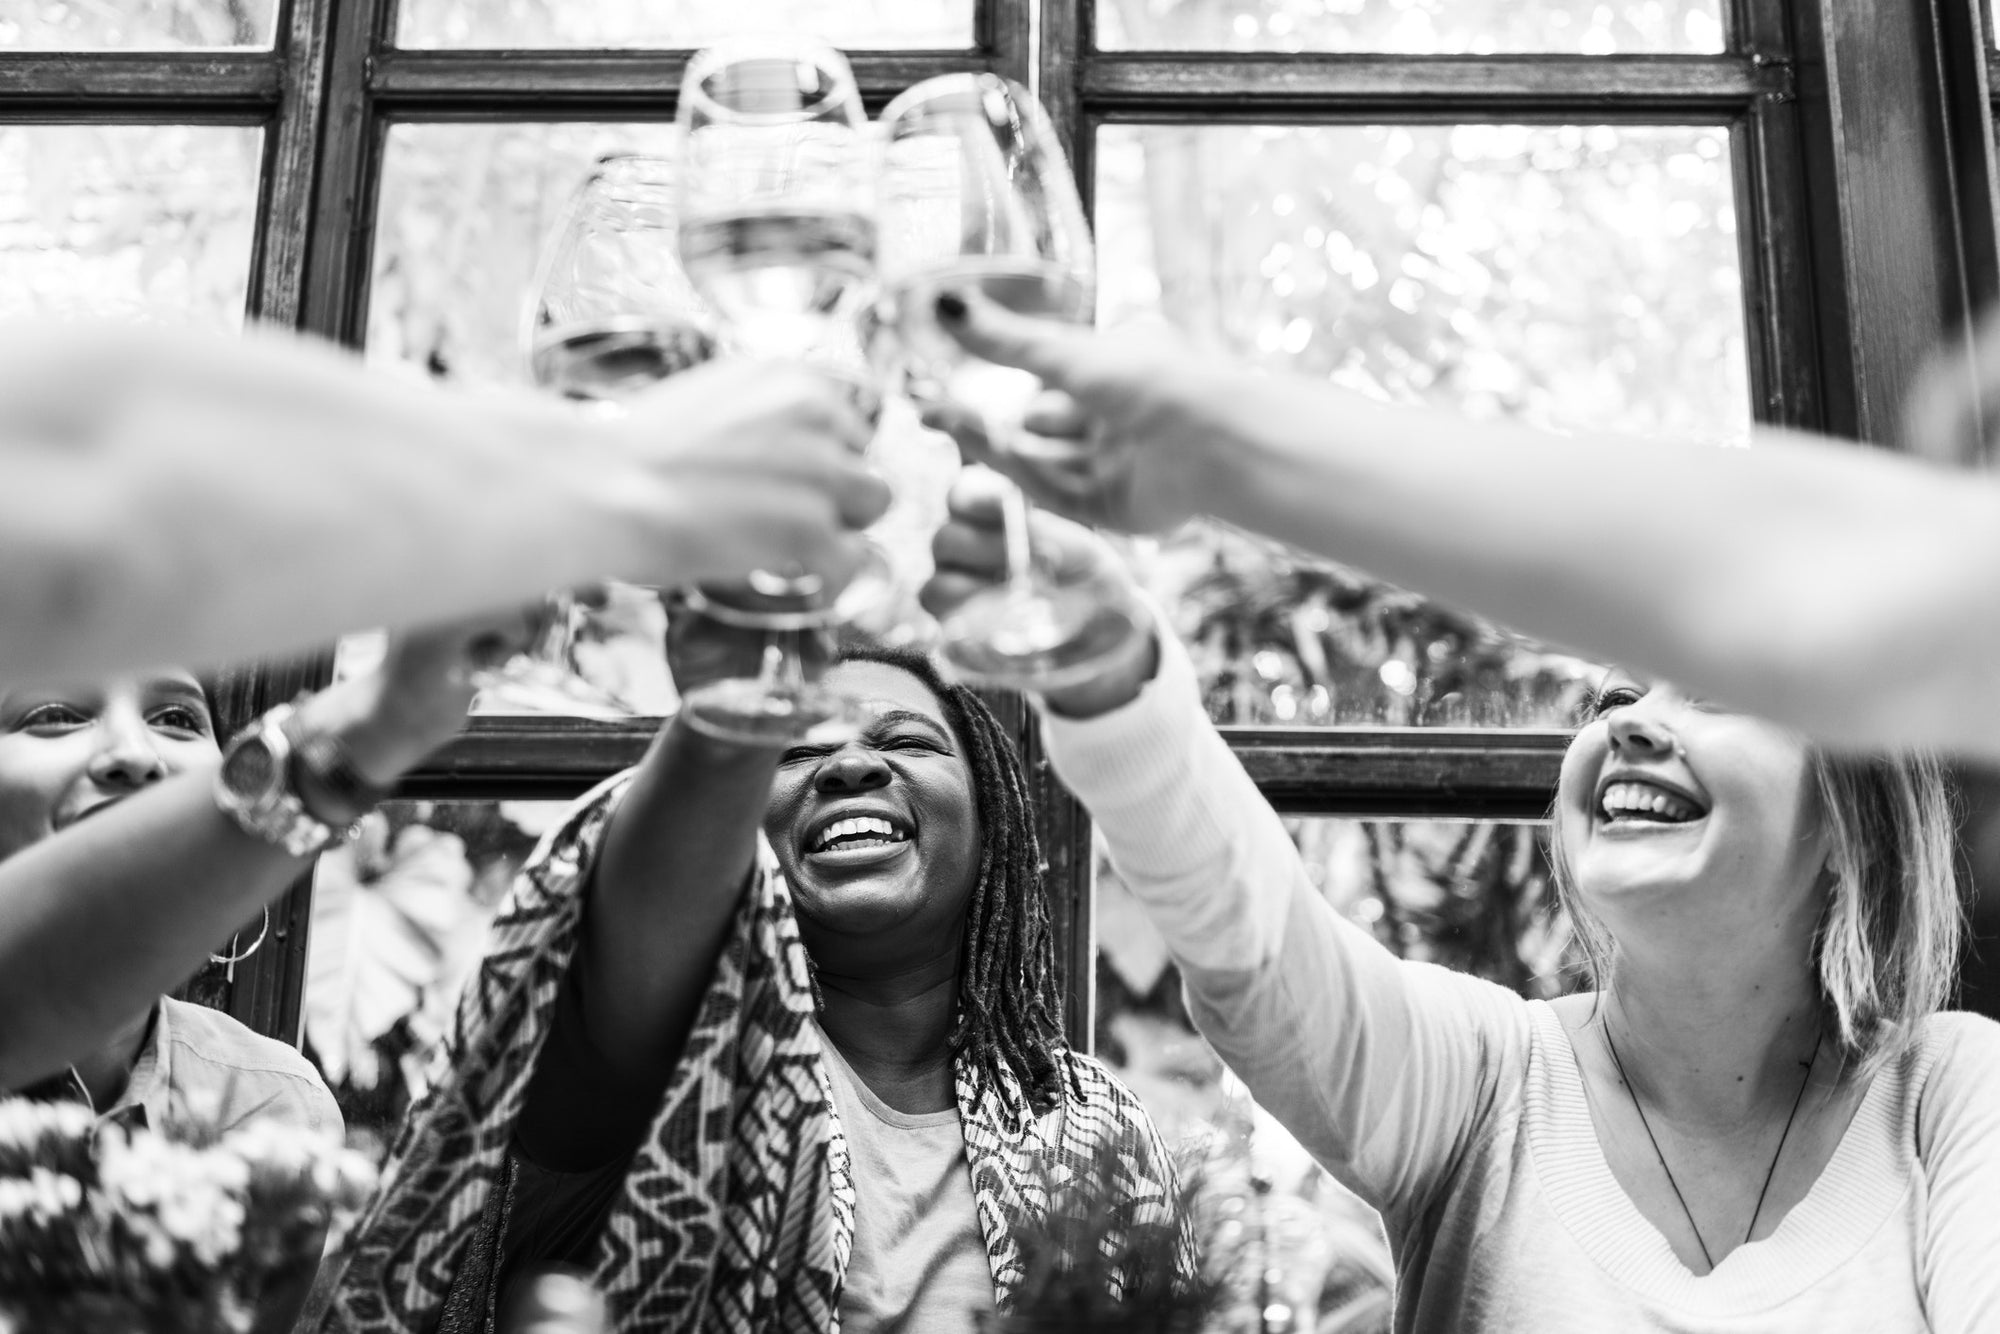 Happy women Cheering With Wine Glasses